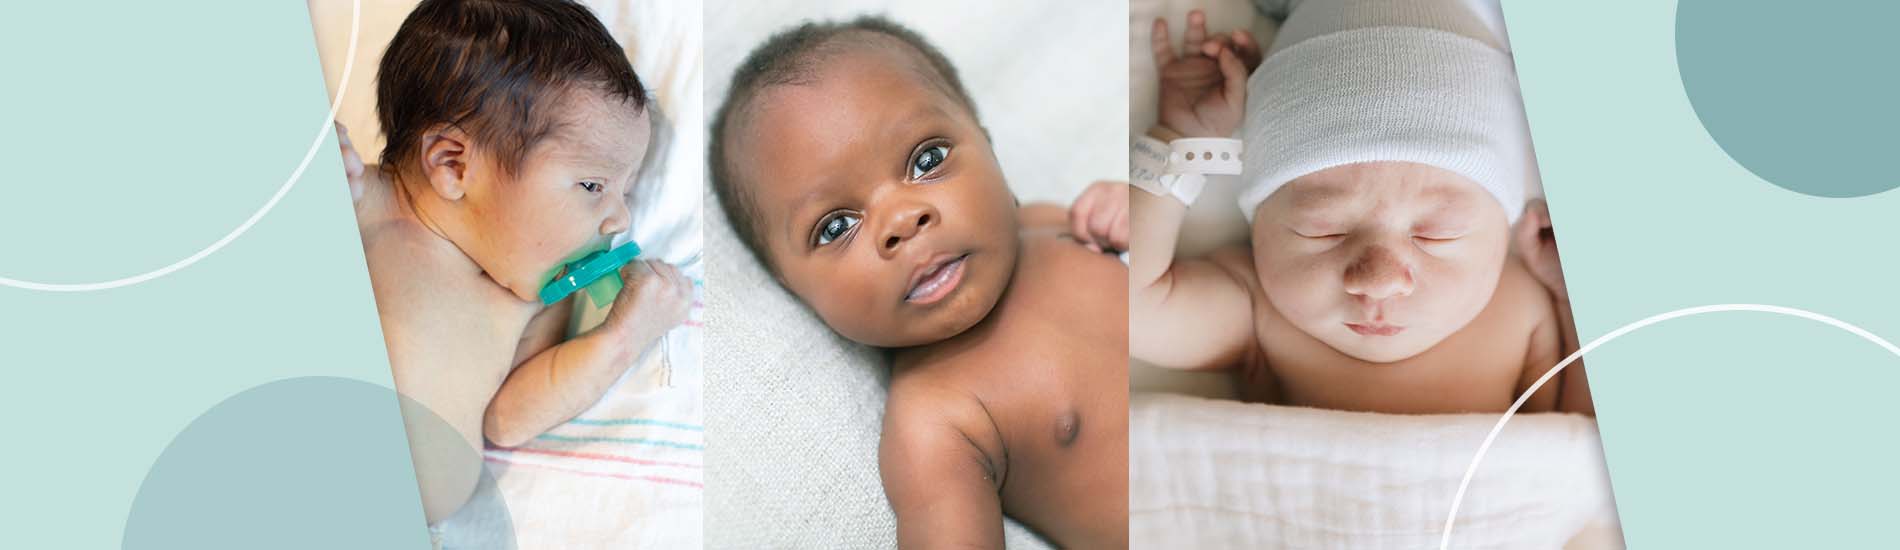 collage of three newborn babies